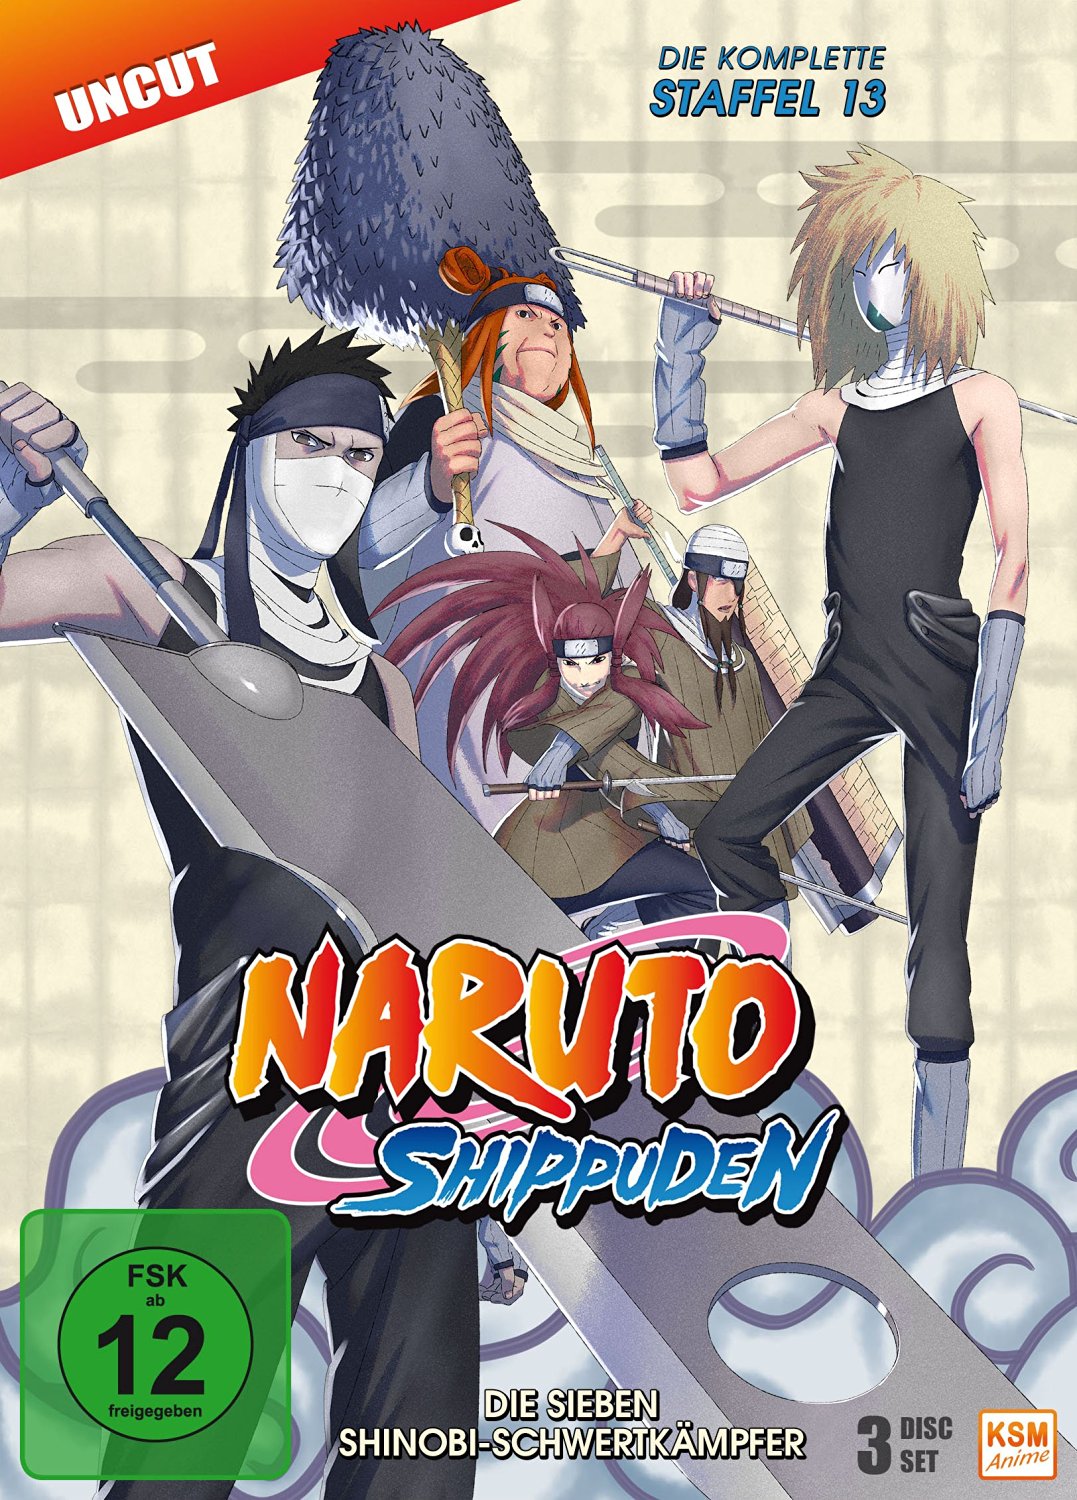 Naruto Shippuden - Staffel 13: Episode 496-509 (uncut) [DVD]